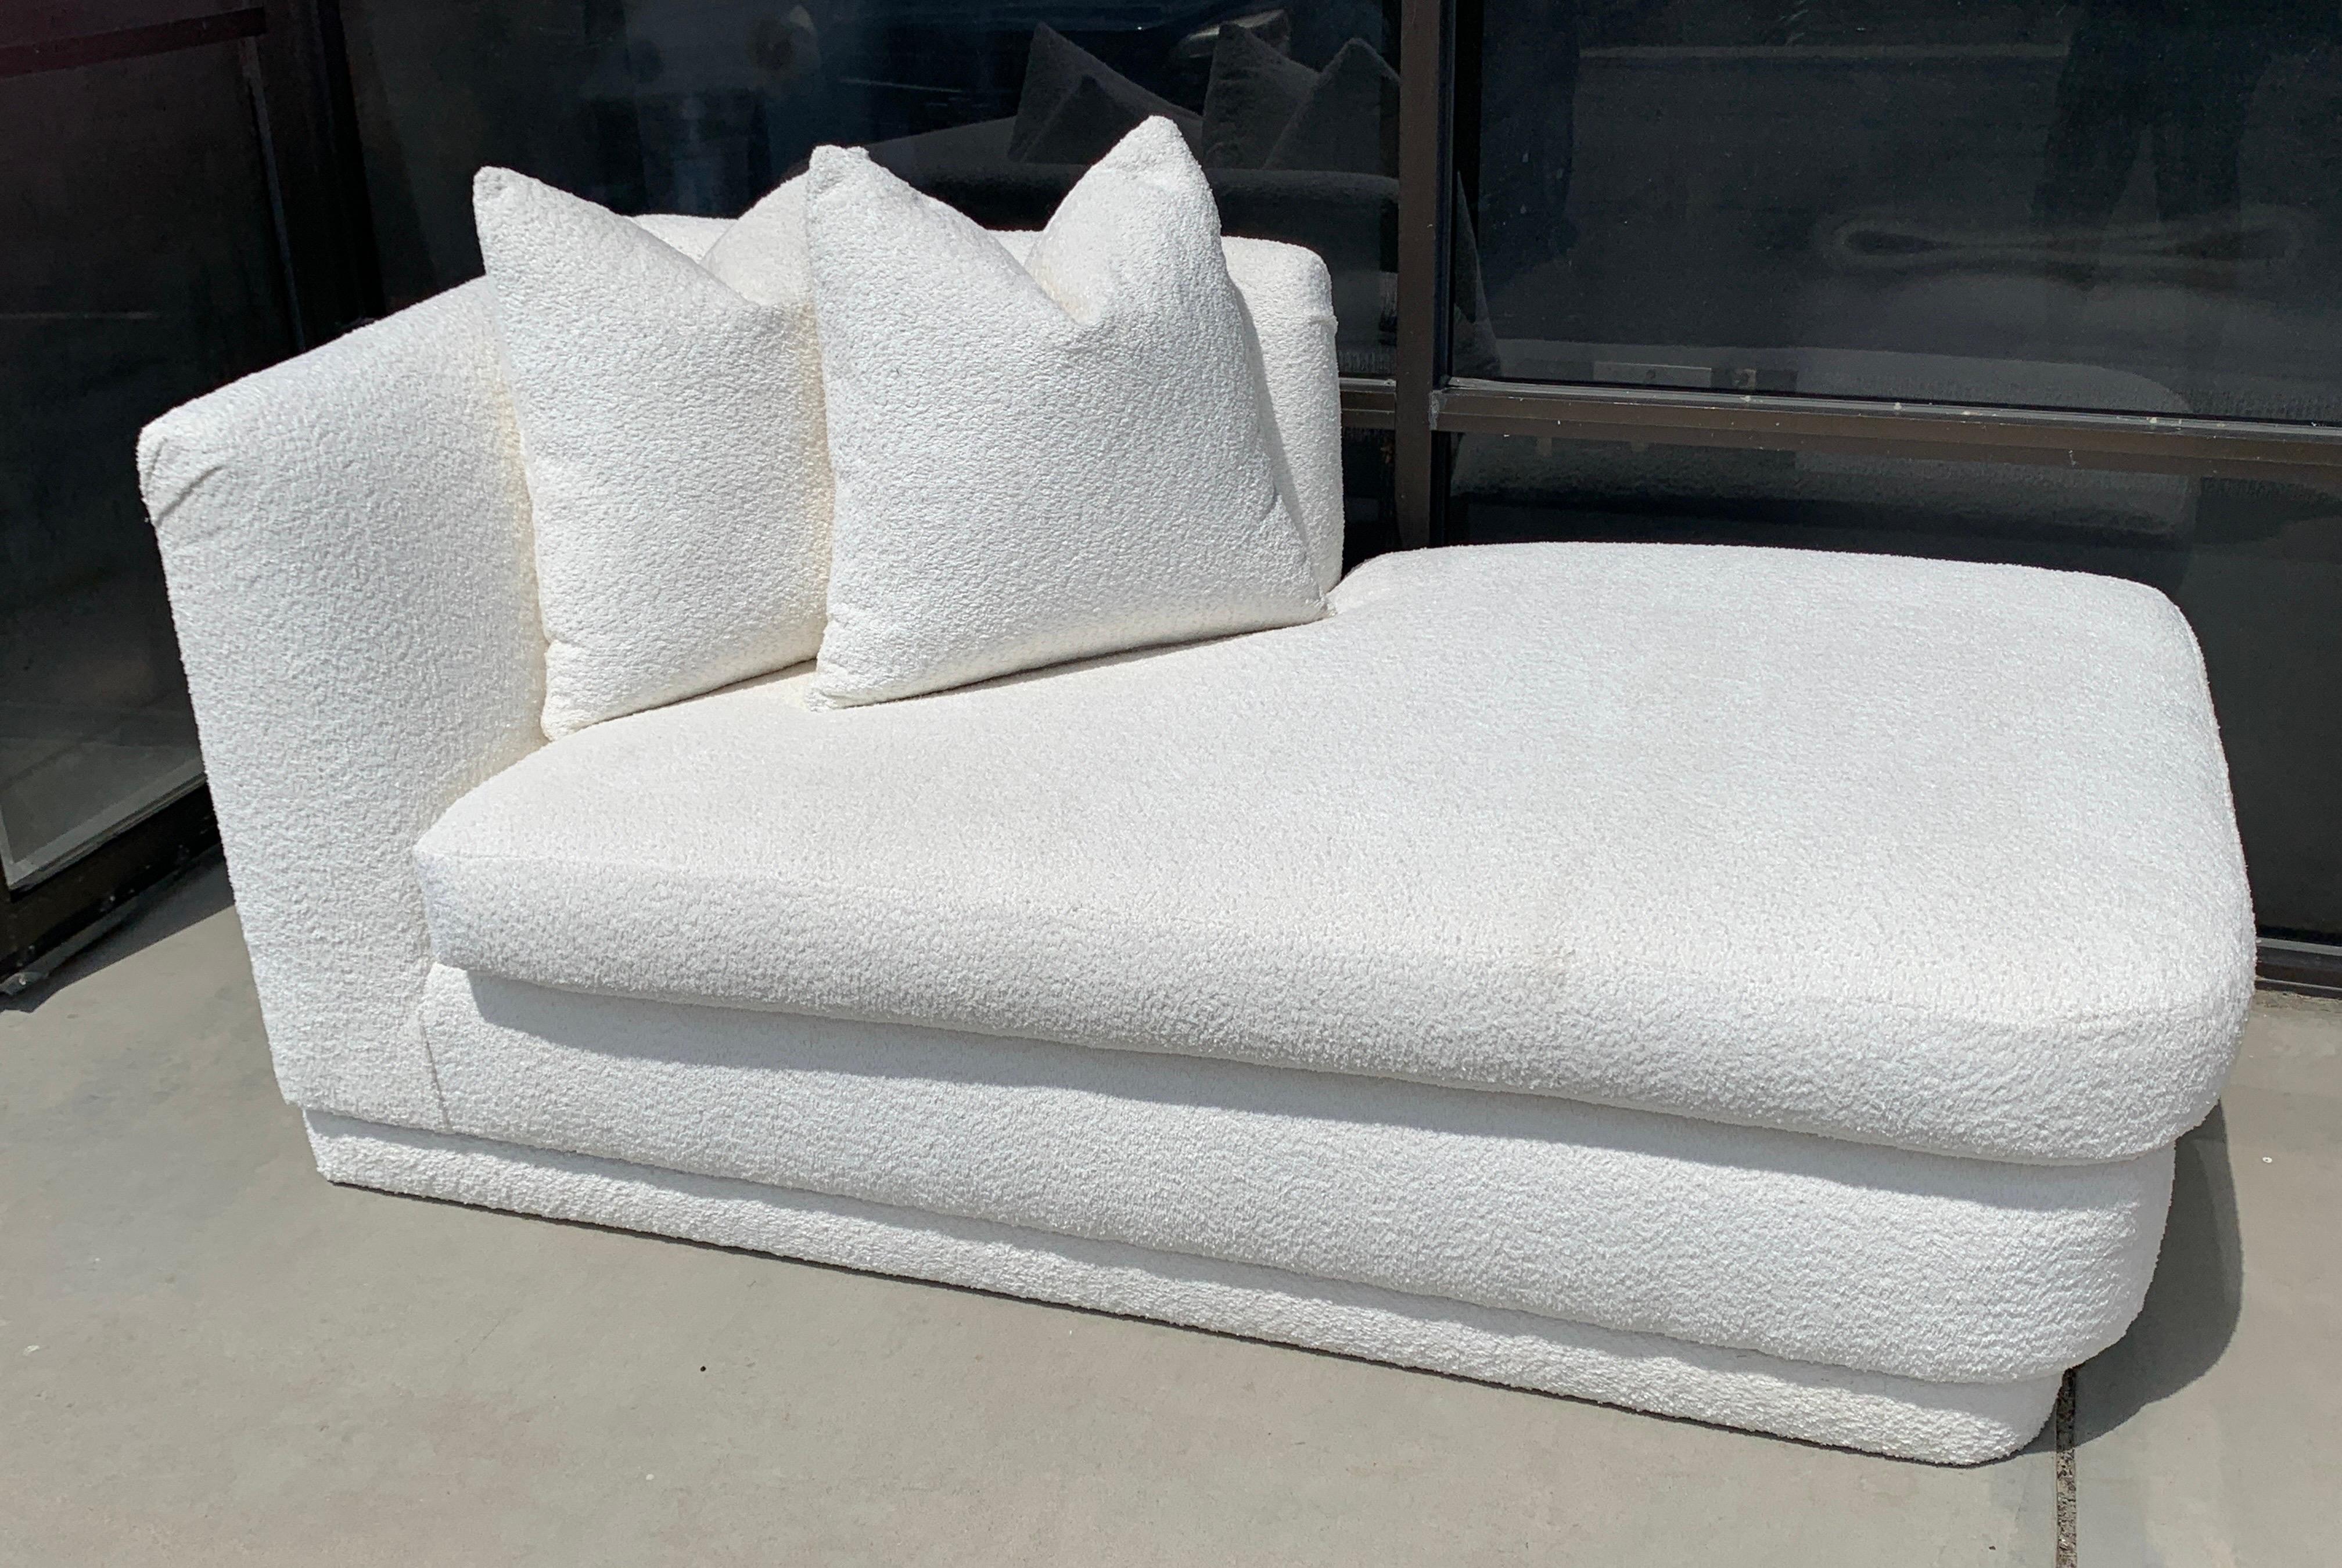 Steve Chaise Off-White Bouclé Chaise Lounge W/ Pair Matching Pillows  (amerikanisch) im Angebot